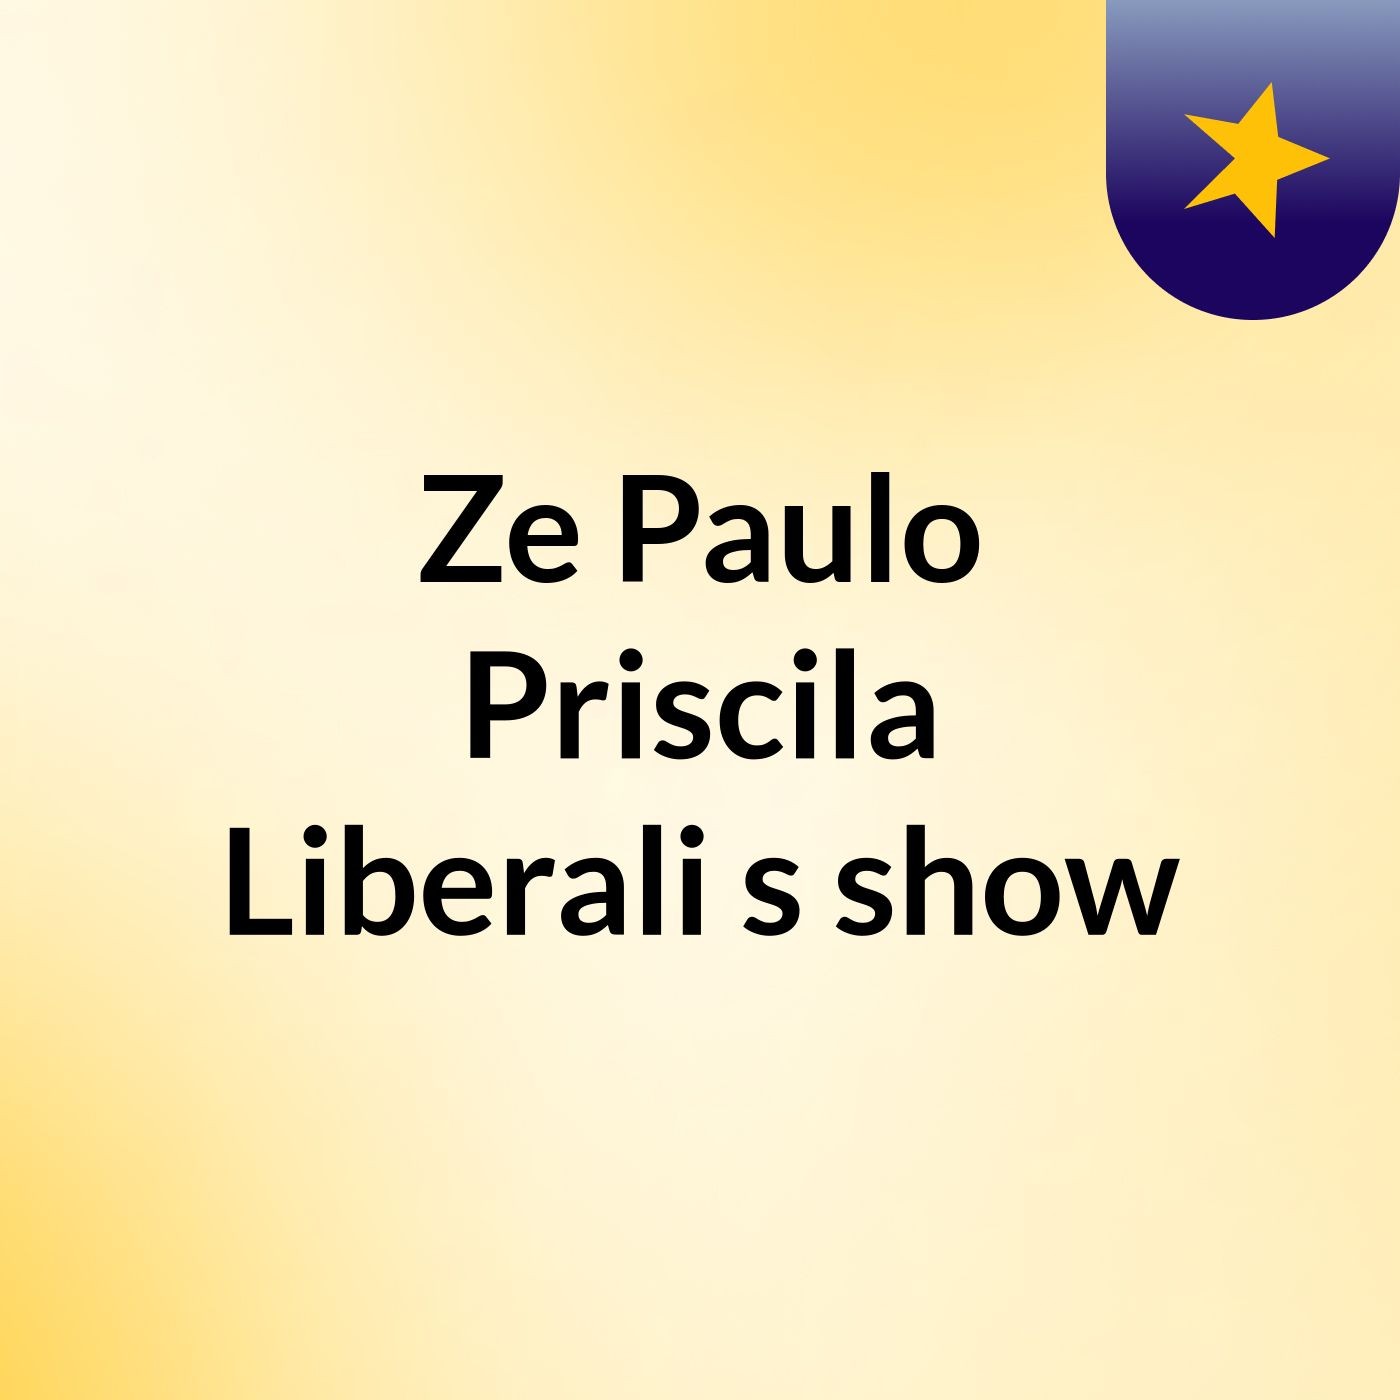 Ze Paulo Priscila Liberali's show